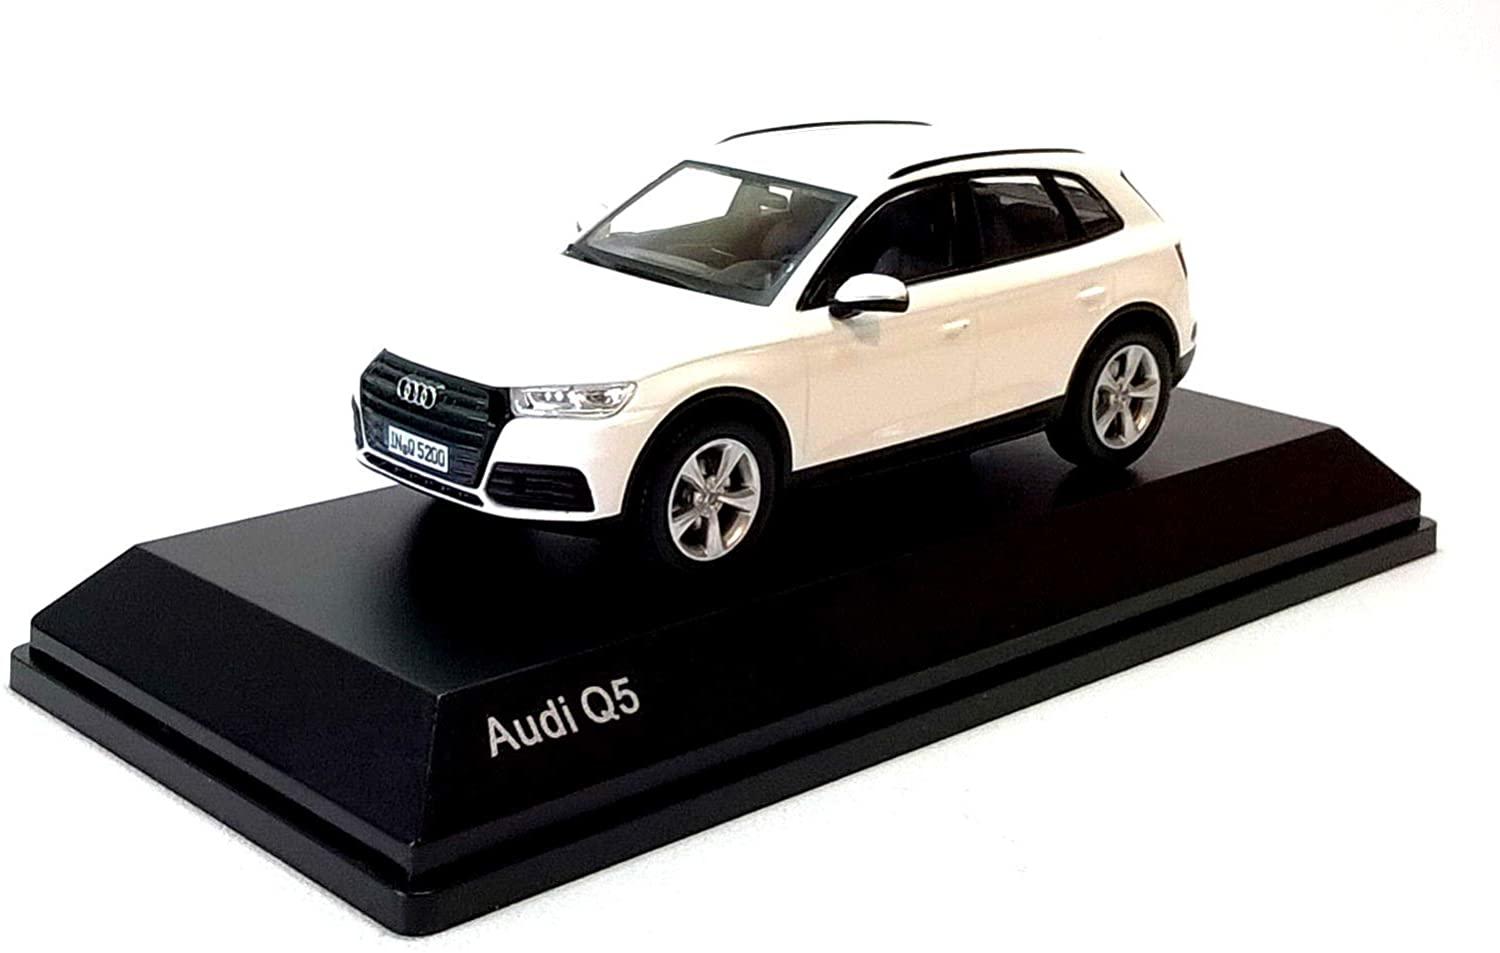 Audi Q5 , ibis white, 1:43 scale model, iSCALE, AUD5011605631